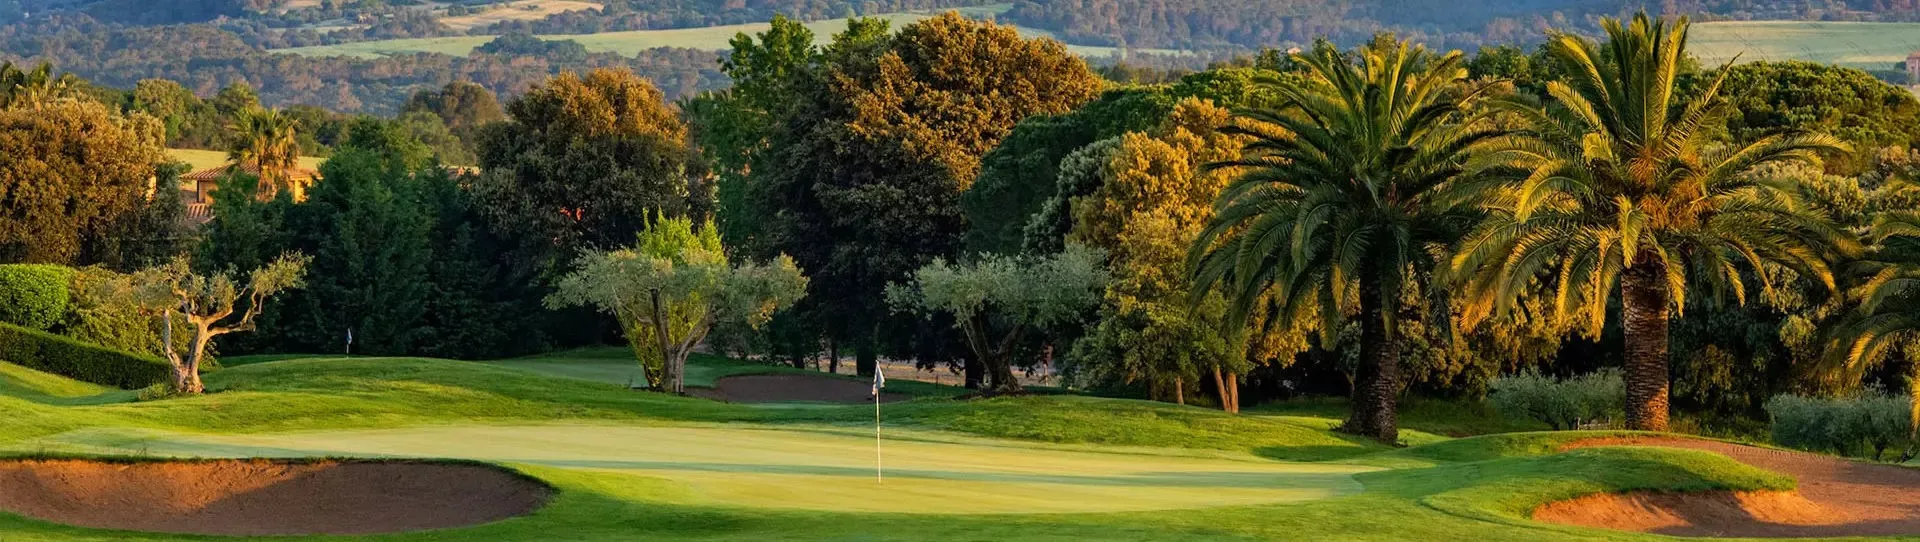 Spain golf courses - Torremirona Golf Course - Photo 2